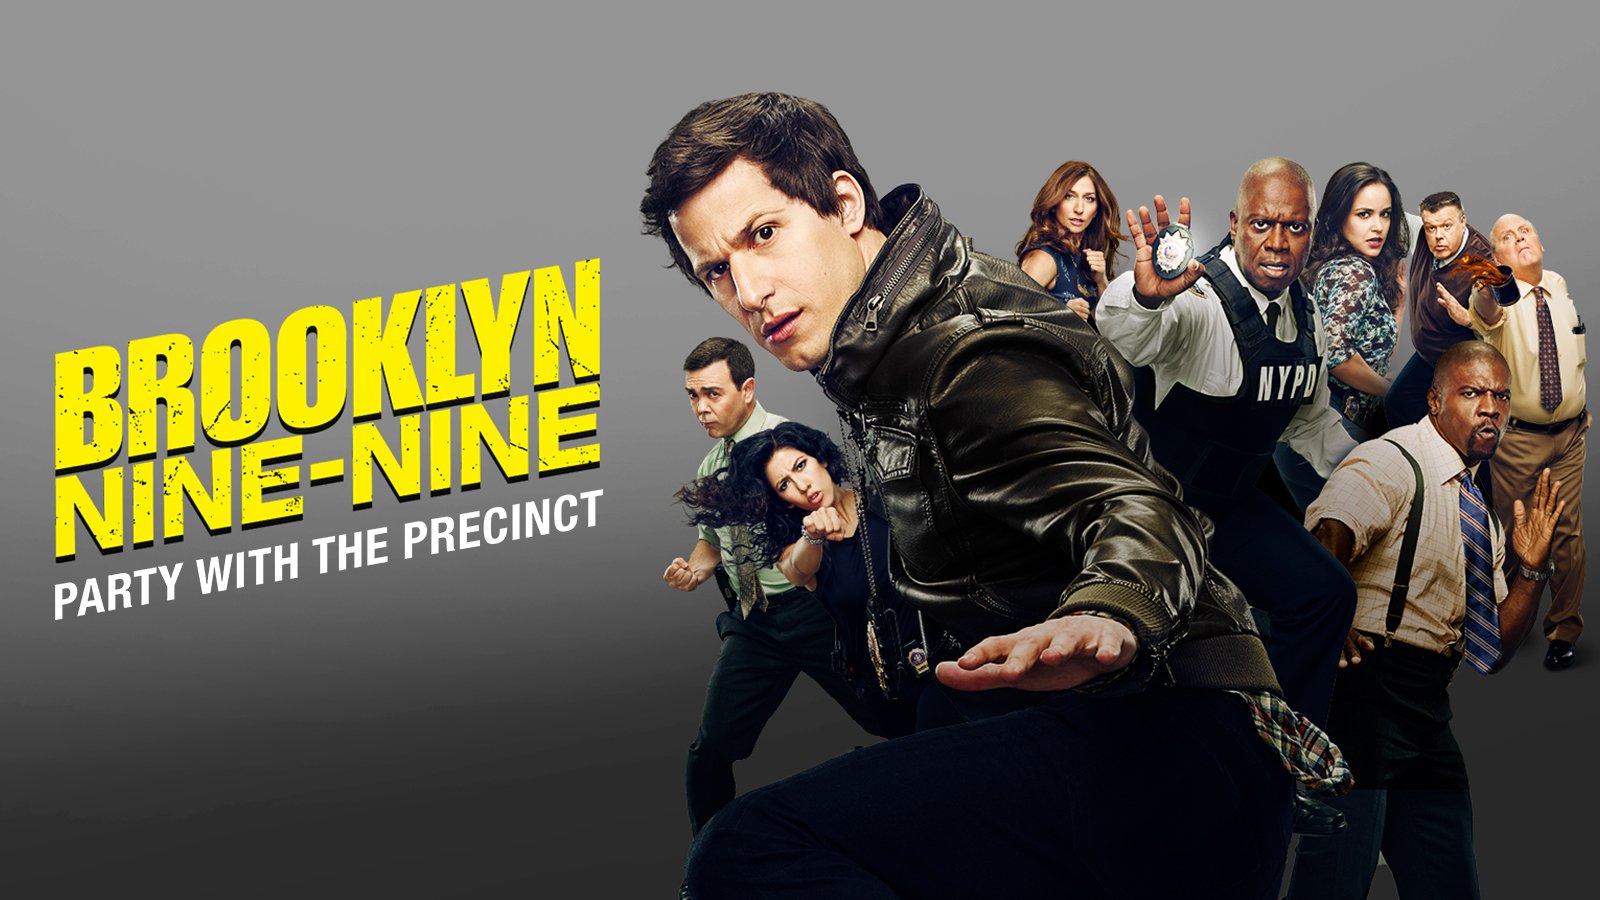 Brooklyn Nine-Nine': A progressive show? - The Stanford Daily